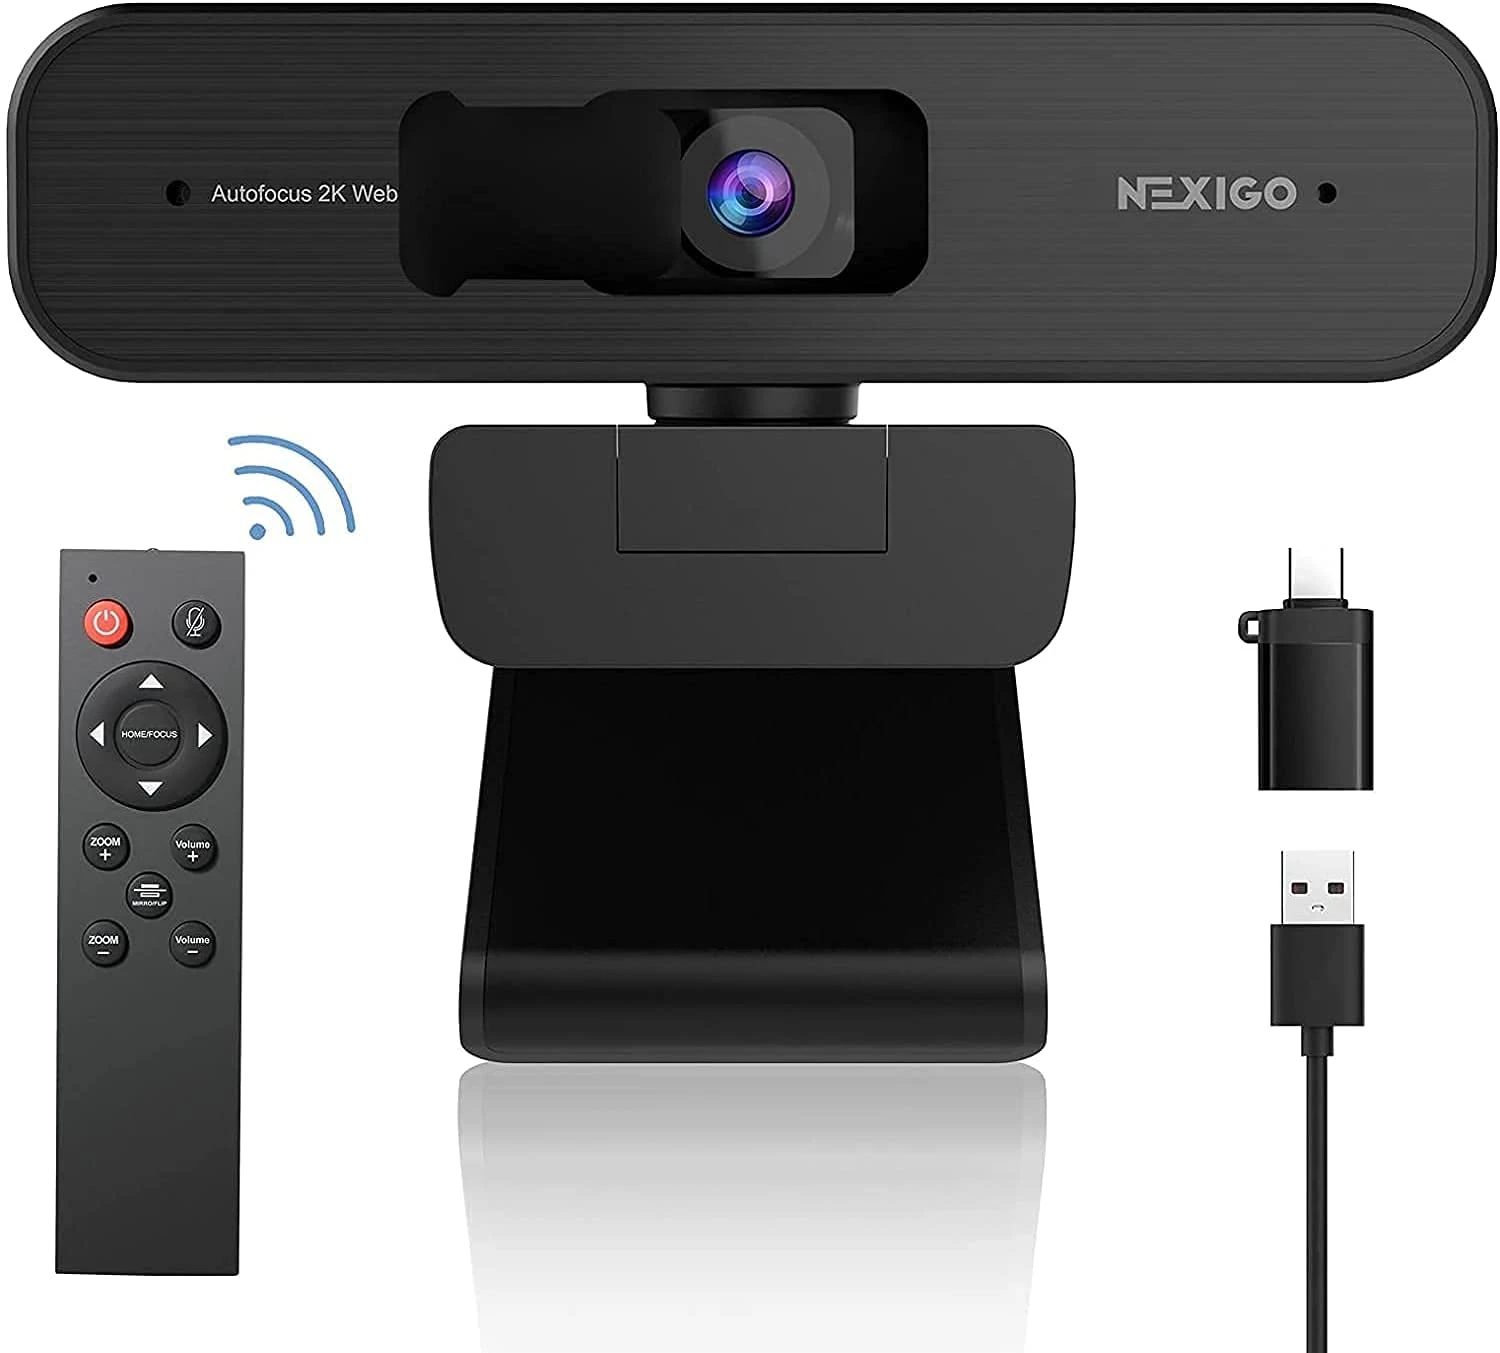 Zoom Zertifiziert, nexiGo N940P 2K Zoomable Webcam mit Fernbedienung und  Software Steuert | Sony Starvis Sensor | 1080P @ 60FPS | 3X|Funkadapter| -  AliExpress